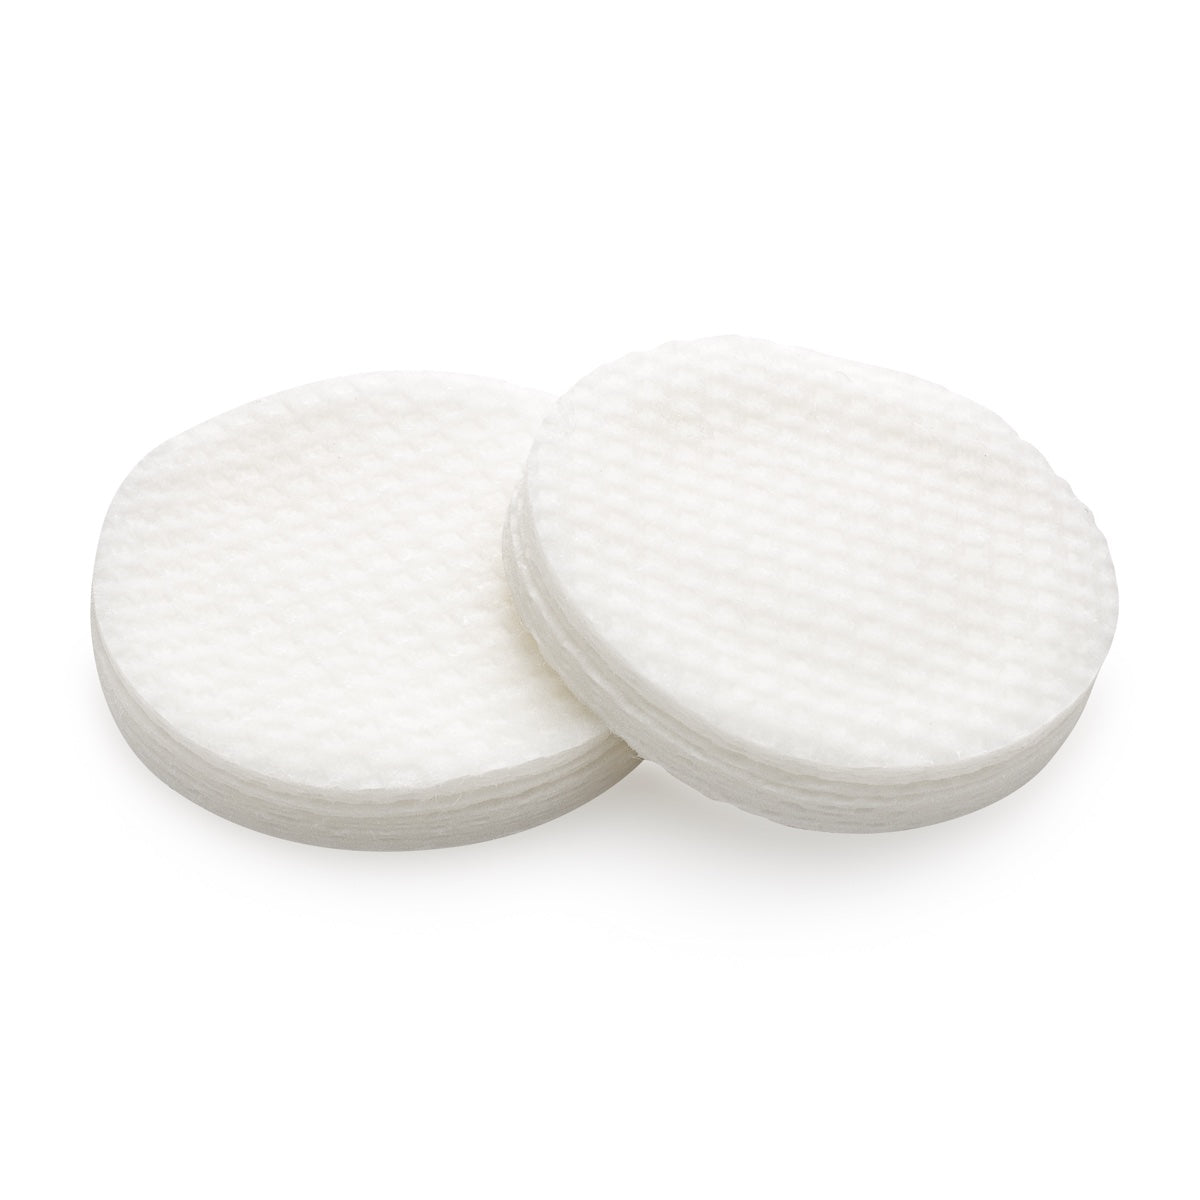 Correct acne treatment pads white round circle gauze pads 60 count Dermal Essentials Medical Grade Skincare  